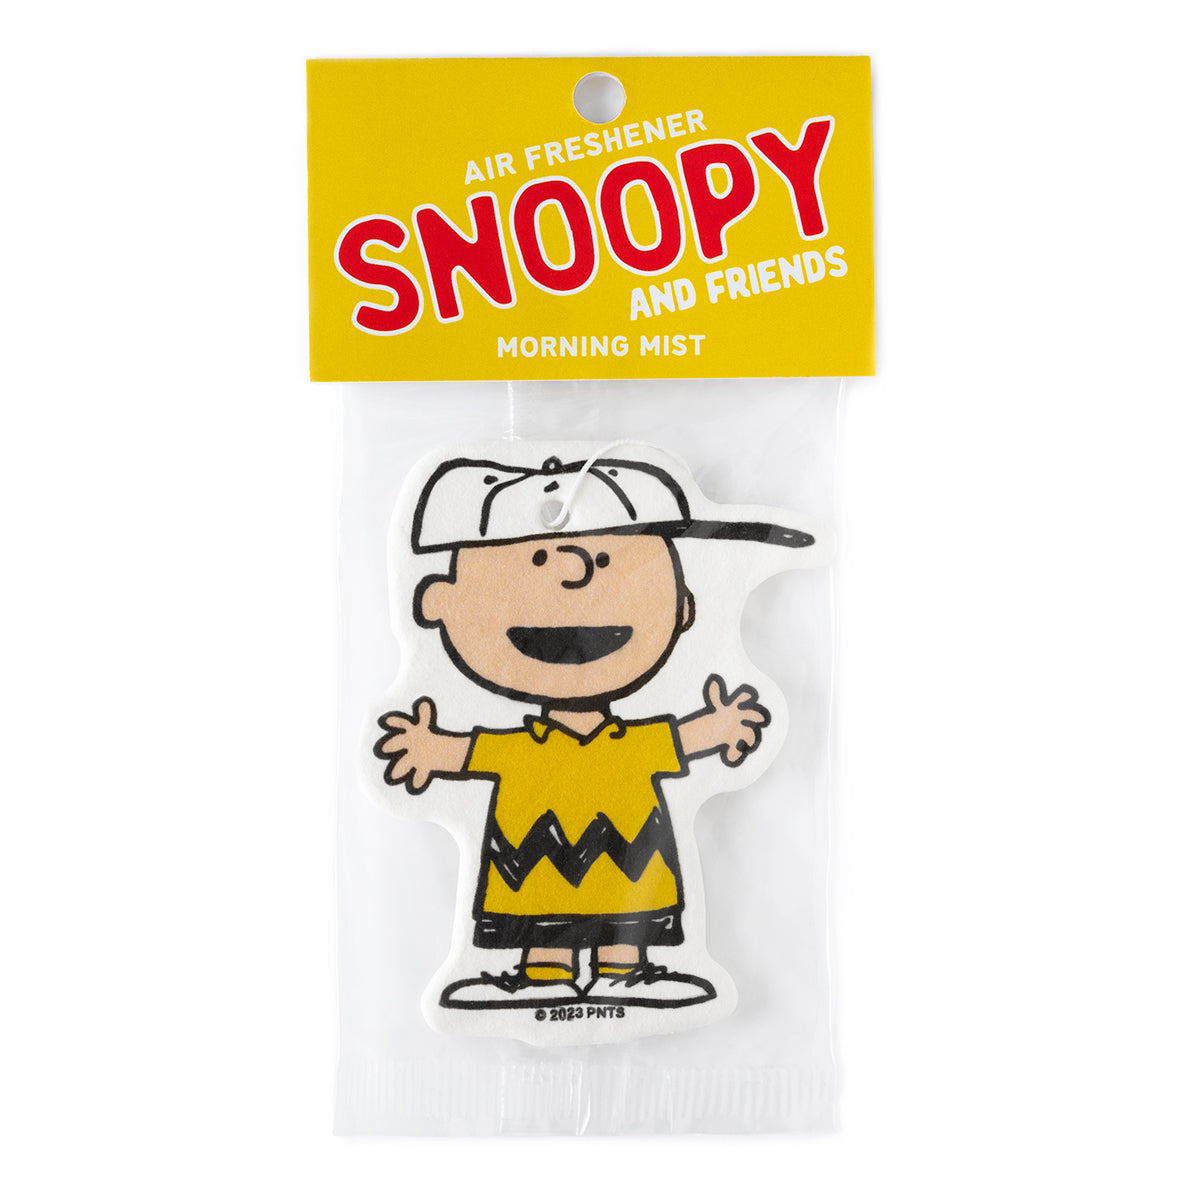 Custom Peanuts Stickers - Charlie Brown, Snoopy, & More